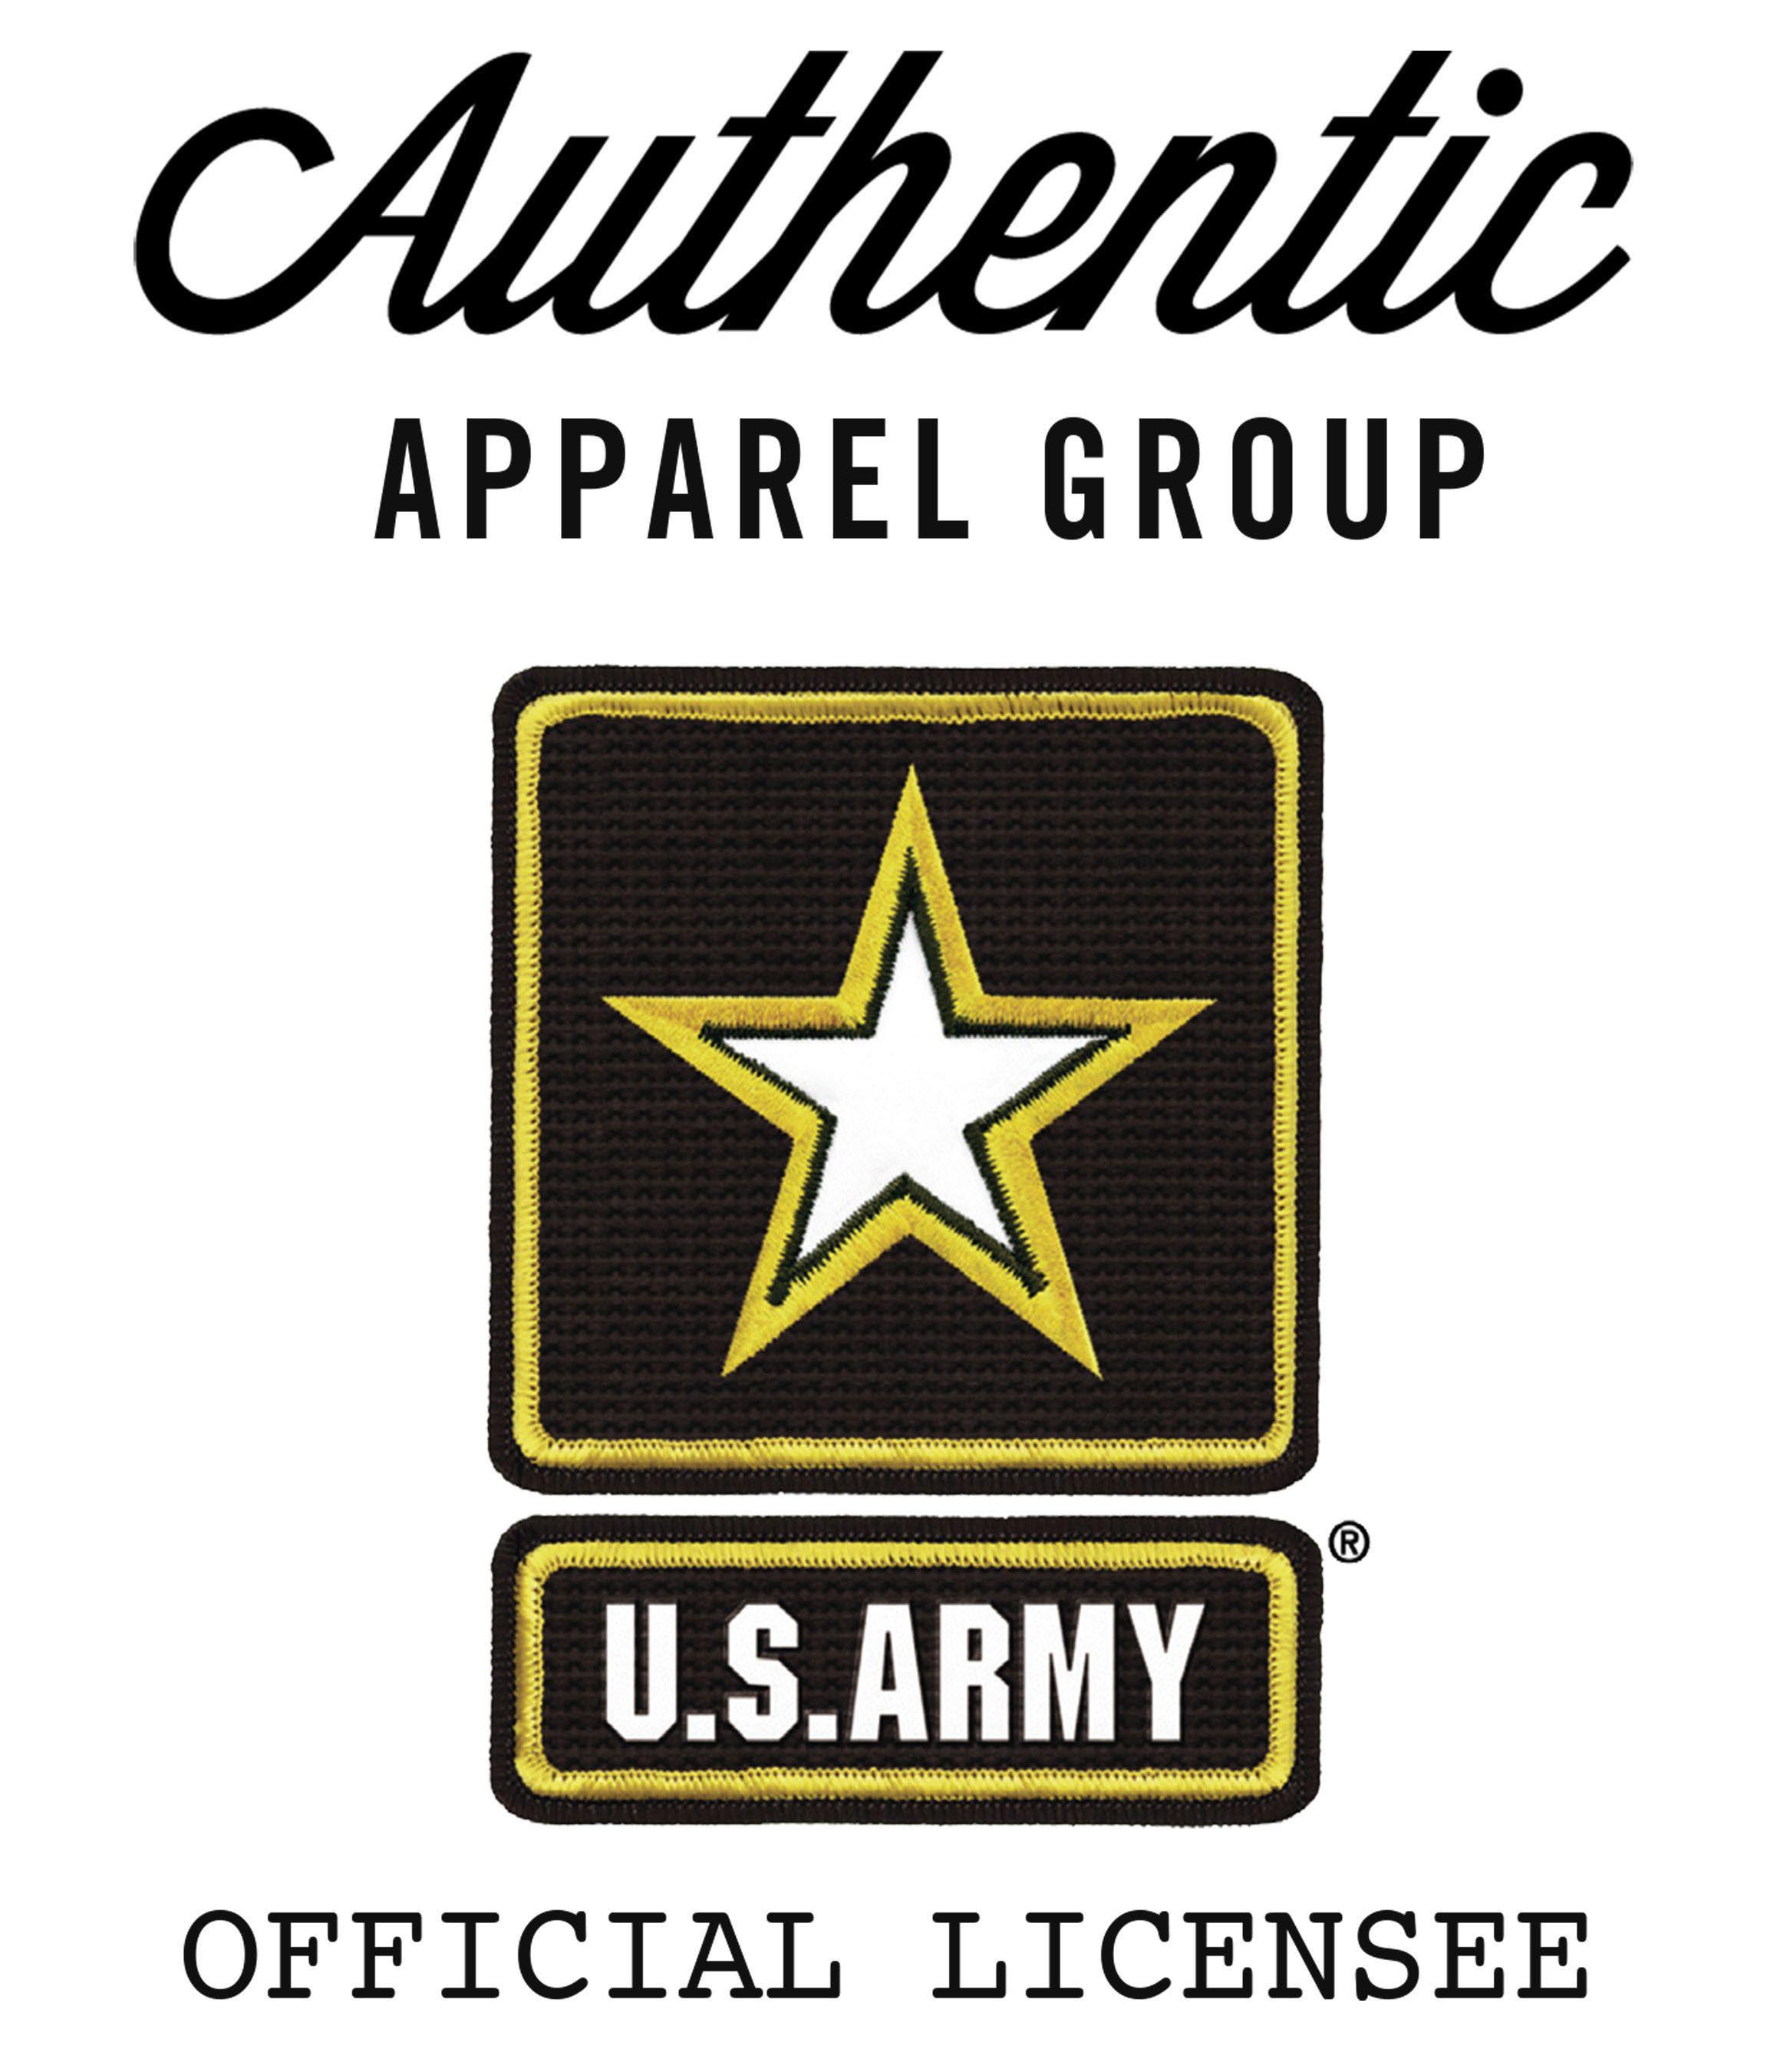 Apparel Group Logo - AUTHENTIC APPAREL GROUP LOGO lifestyle.wordpress.com